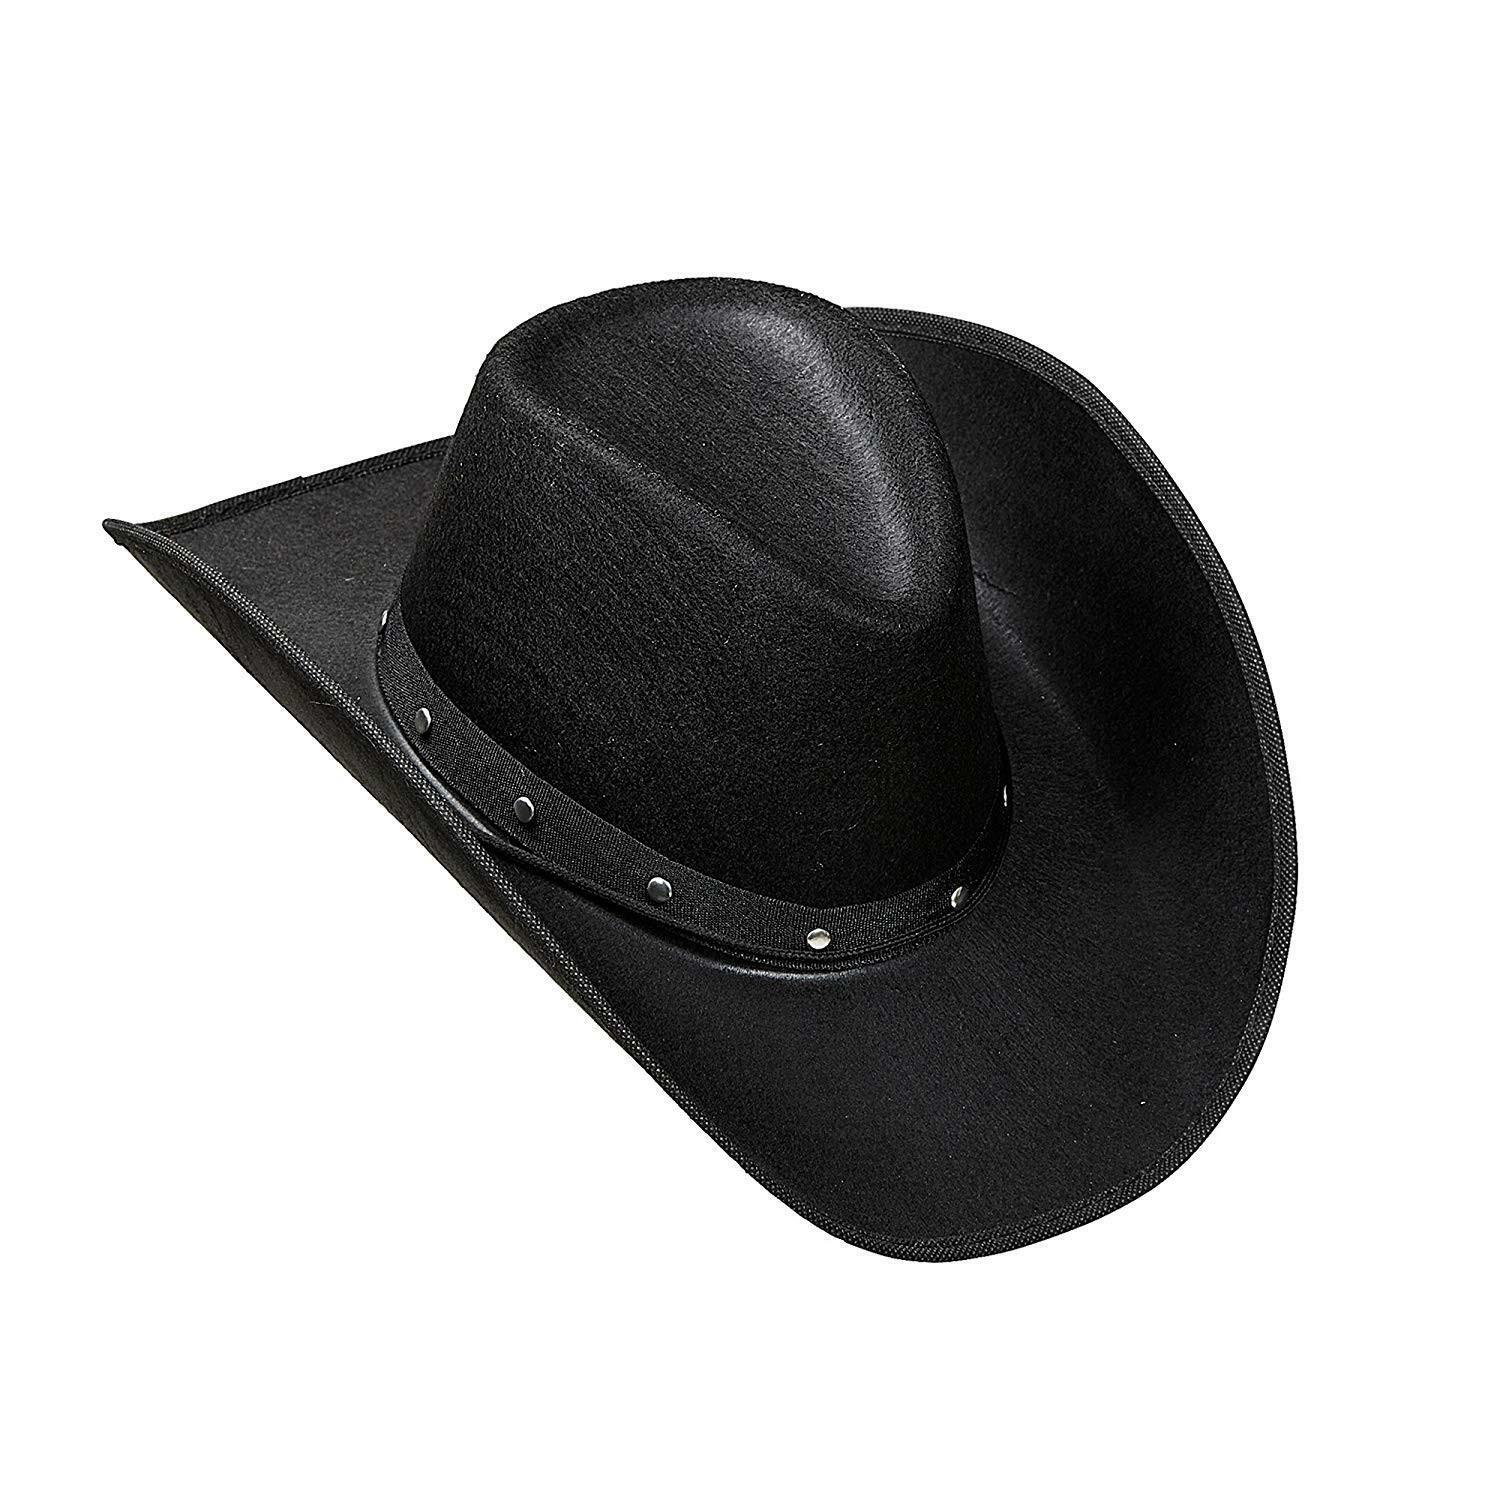 widmann cappello cowboy nero